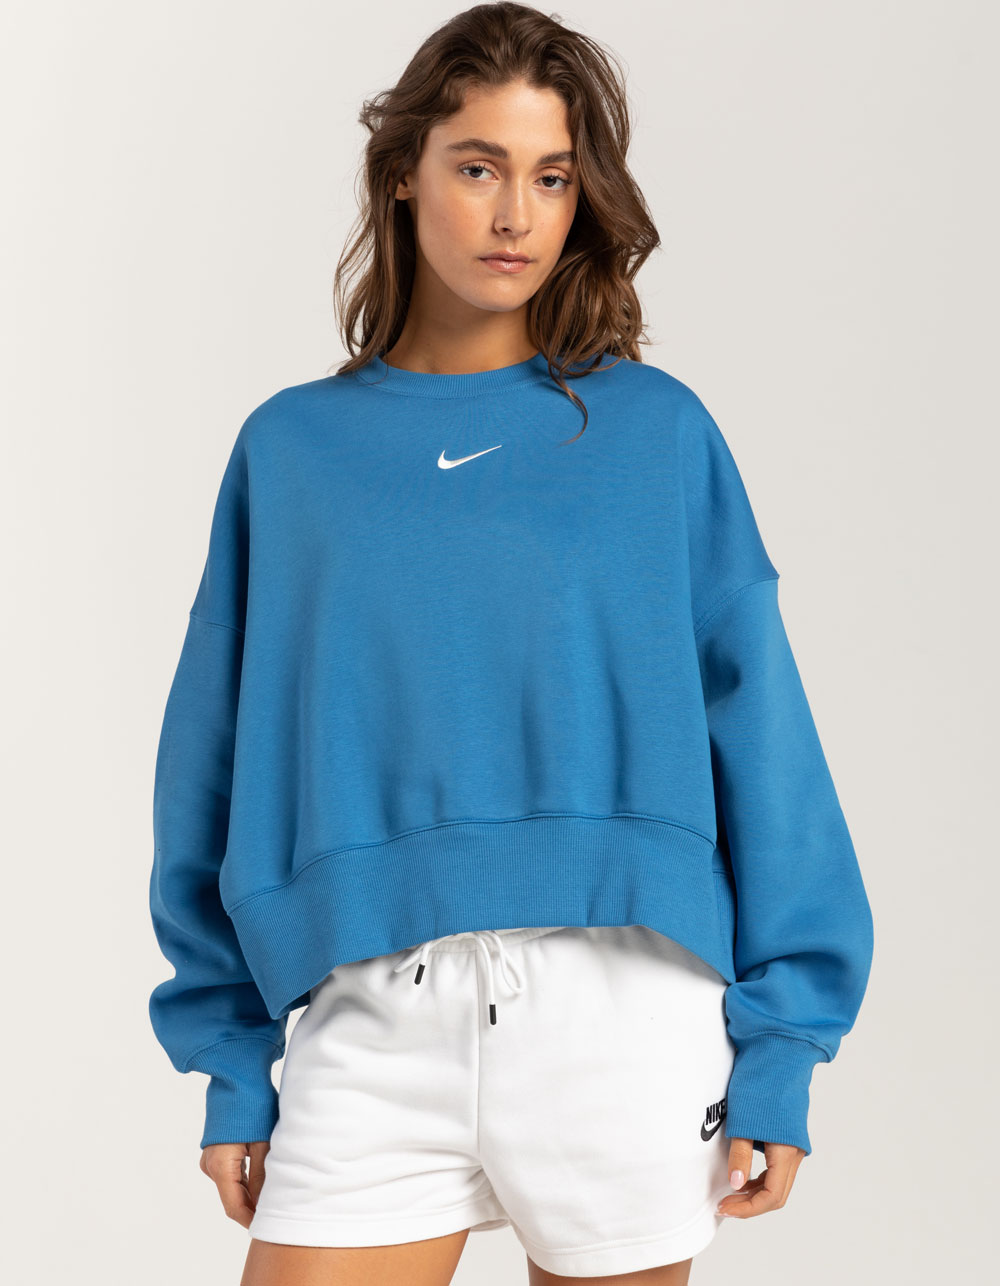 NIKE Sportswear Womens Oversized Crop Crewneck Sweatshirt - MEDIUM BLUE